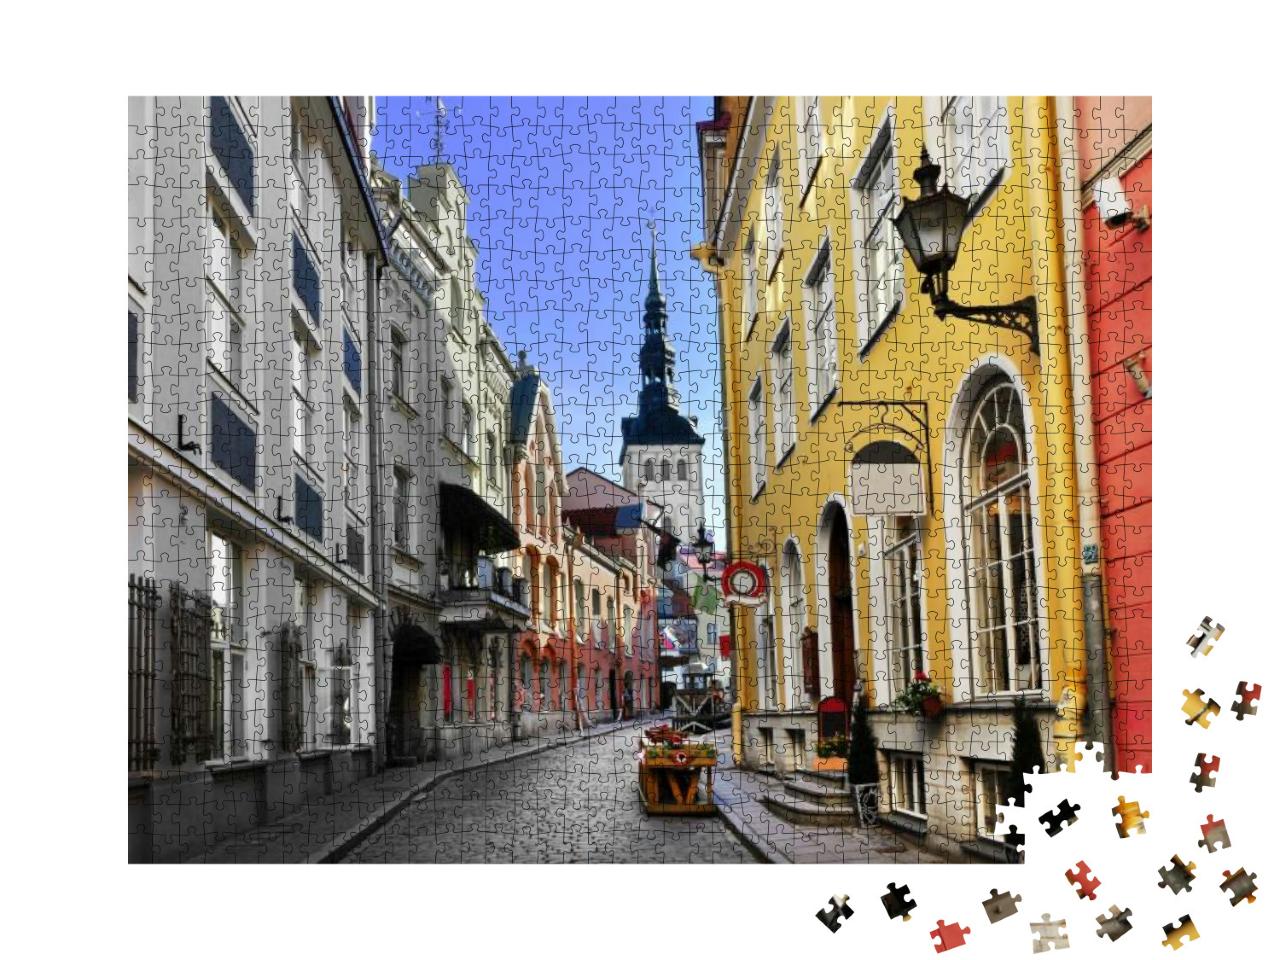 Old Town of Tallinn. Tallinn, Estonia, May 2016... Jigsaw Puzzle with 1000 pieces